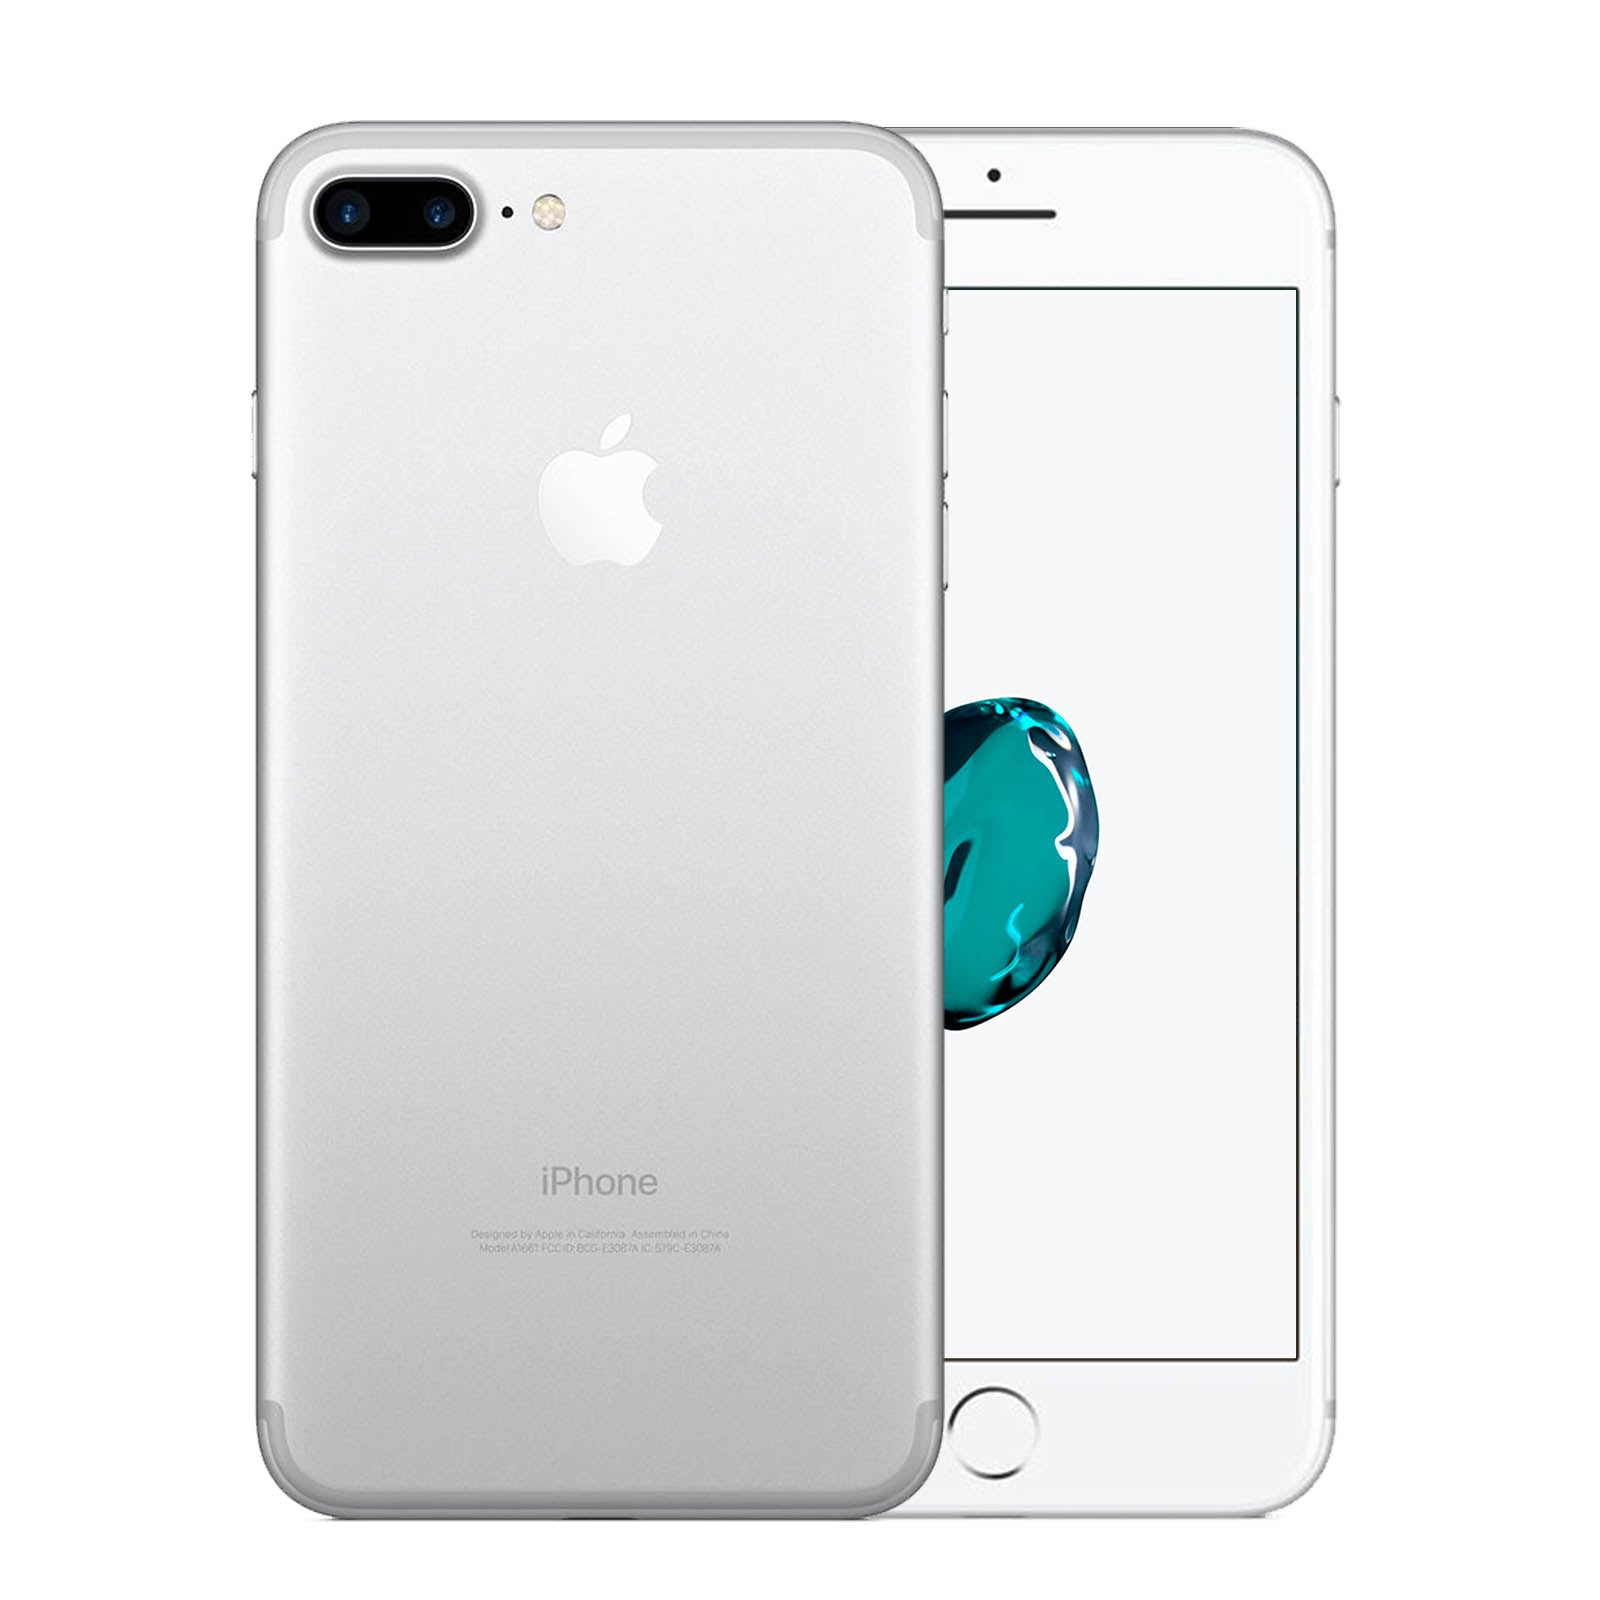 Apple iPhone 7 Plus 32GB Silver Pristine - Unlocked